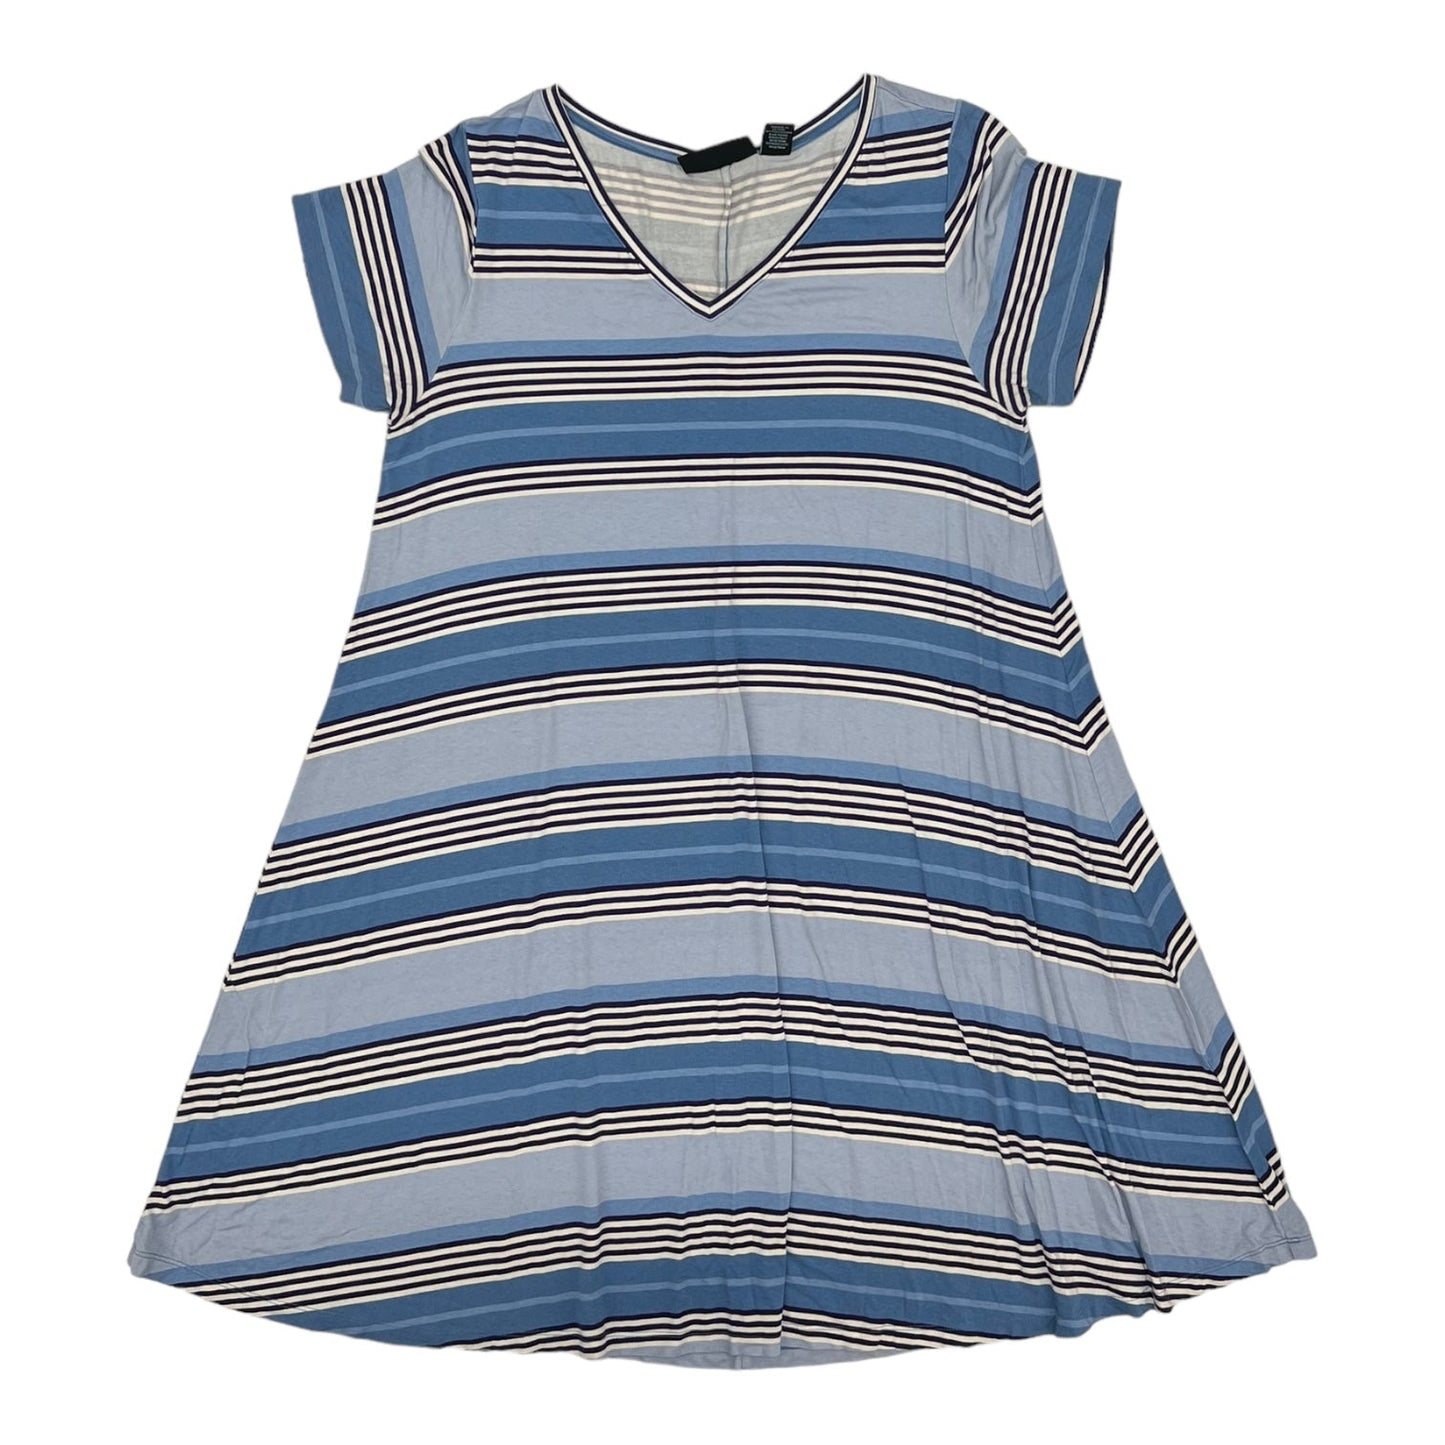 BLUE DRESS CASUAL SHORT by CYNTHIA ROWLEY Size:1X